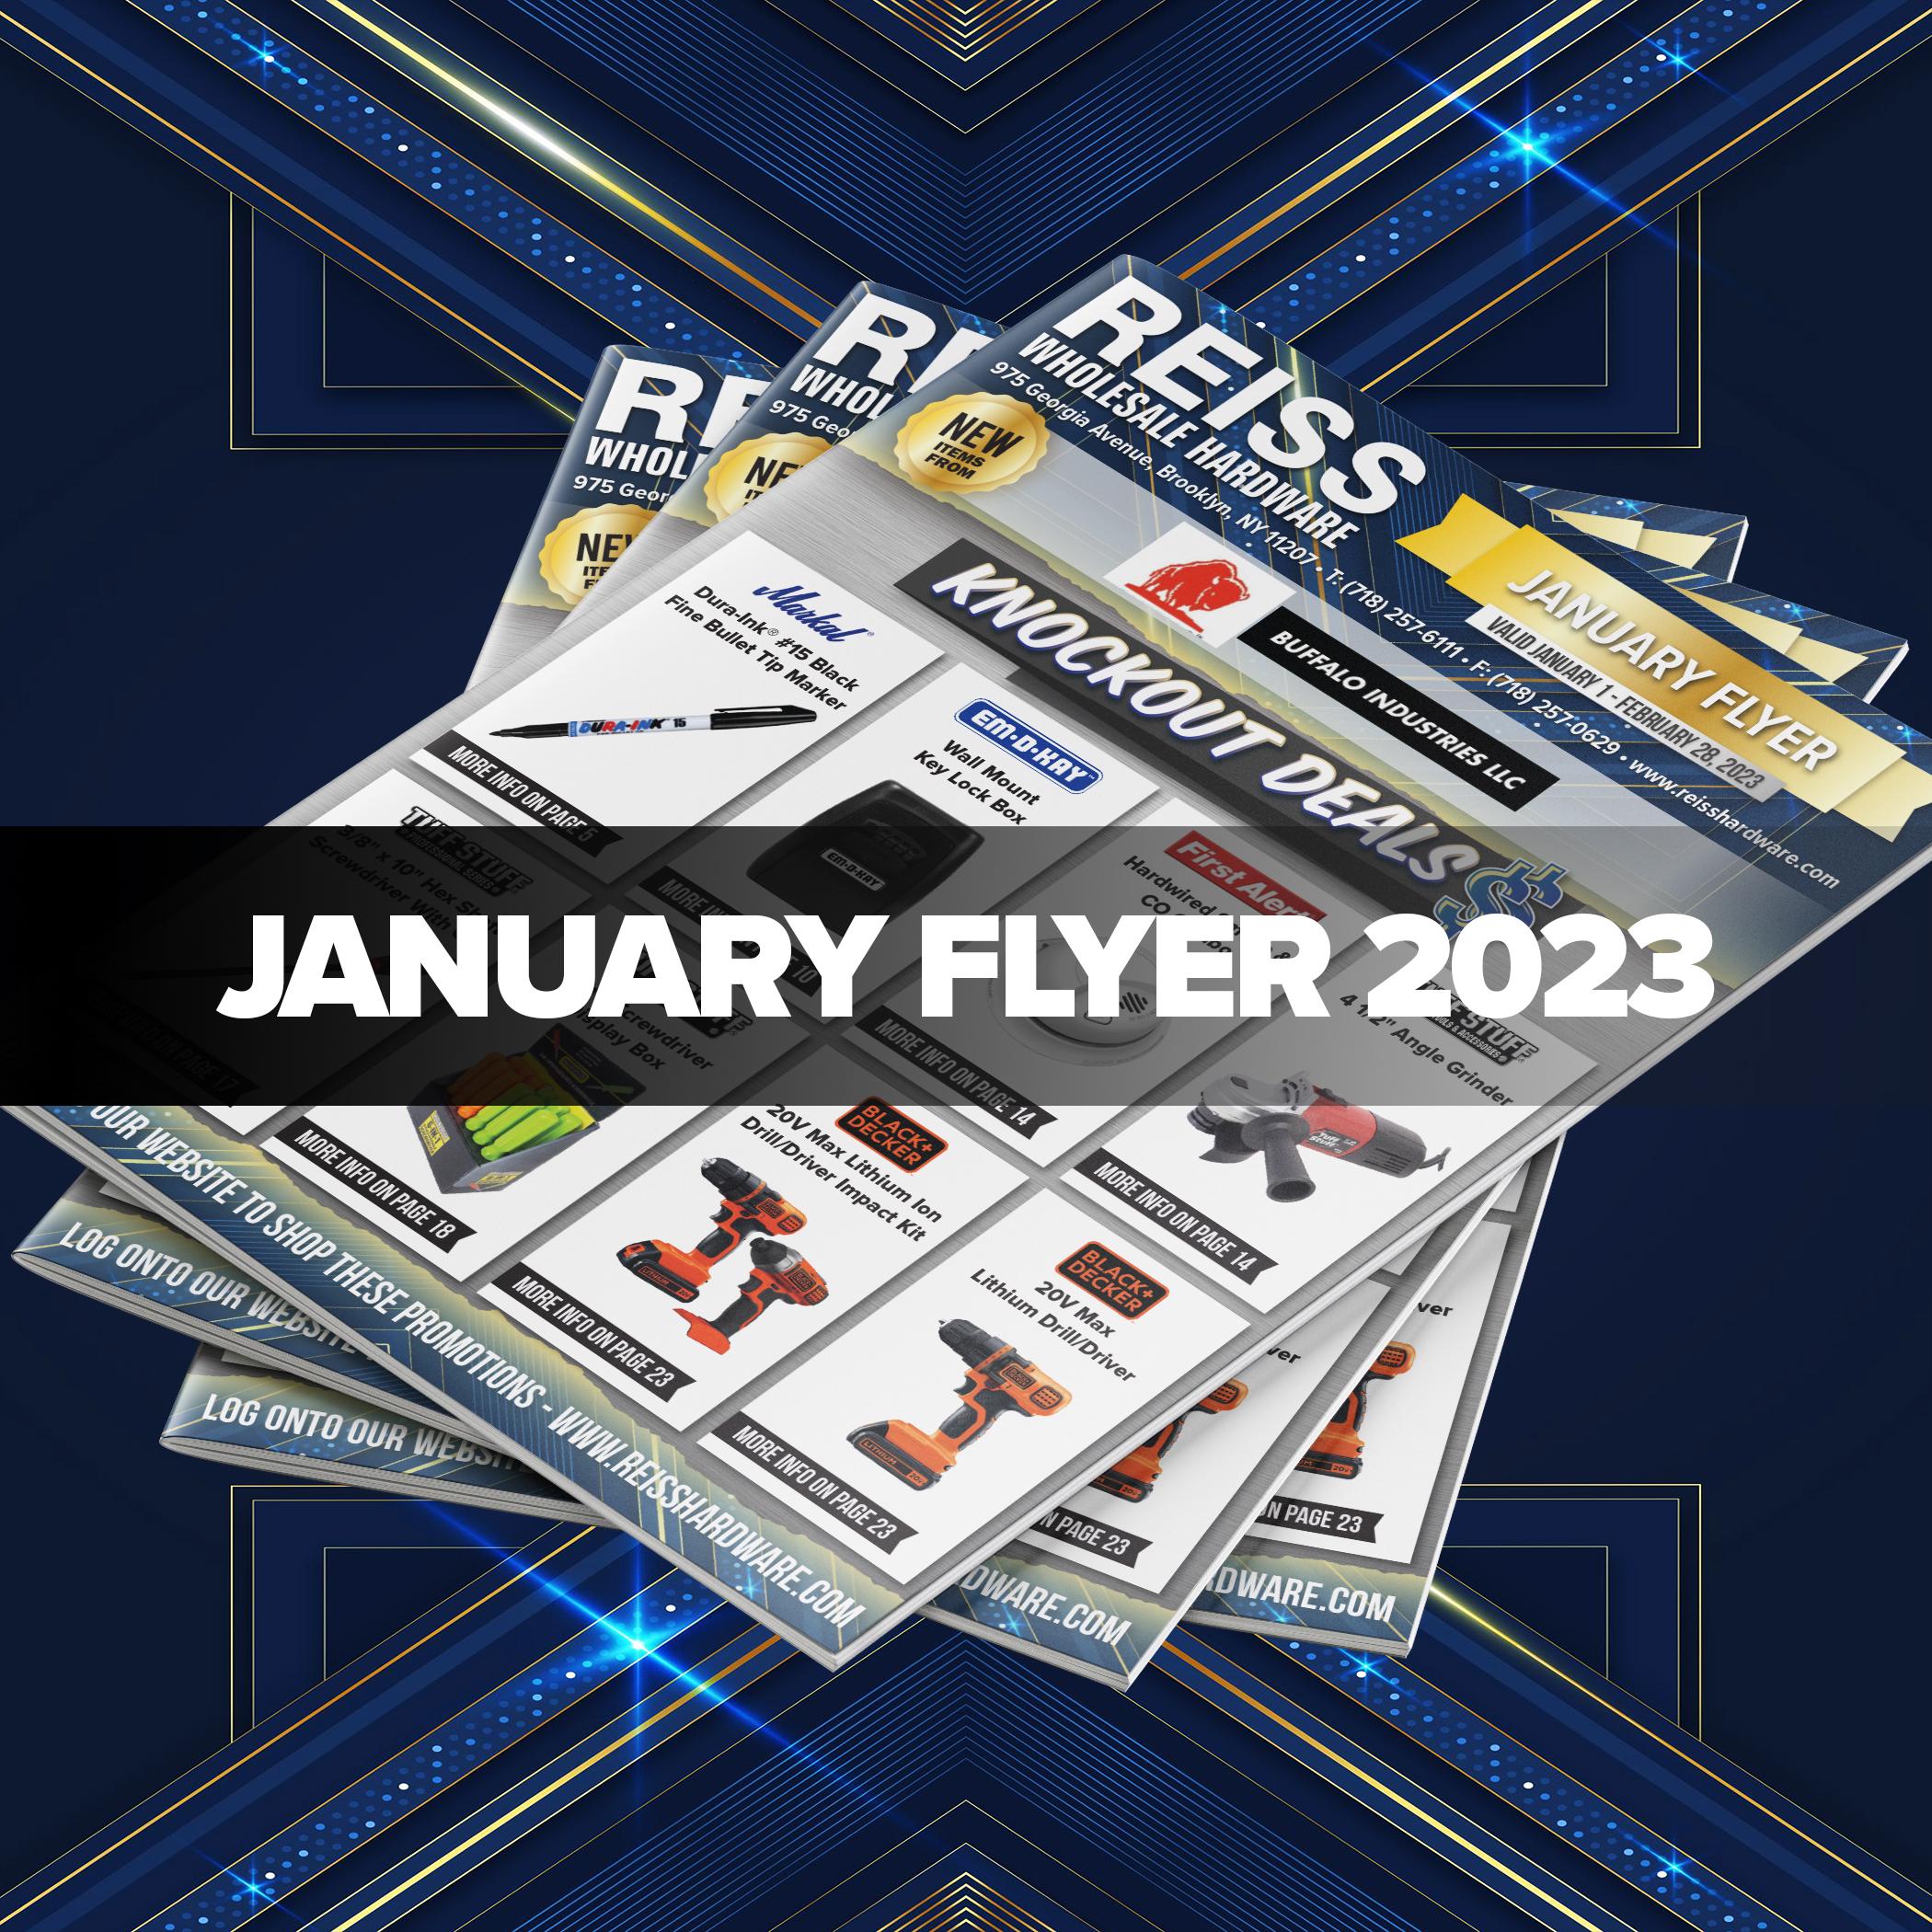 January Flyer 2023